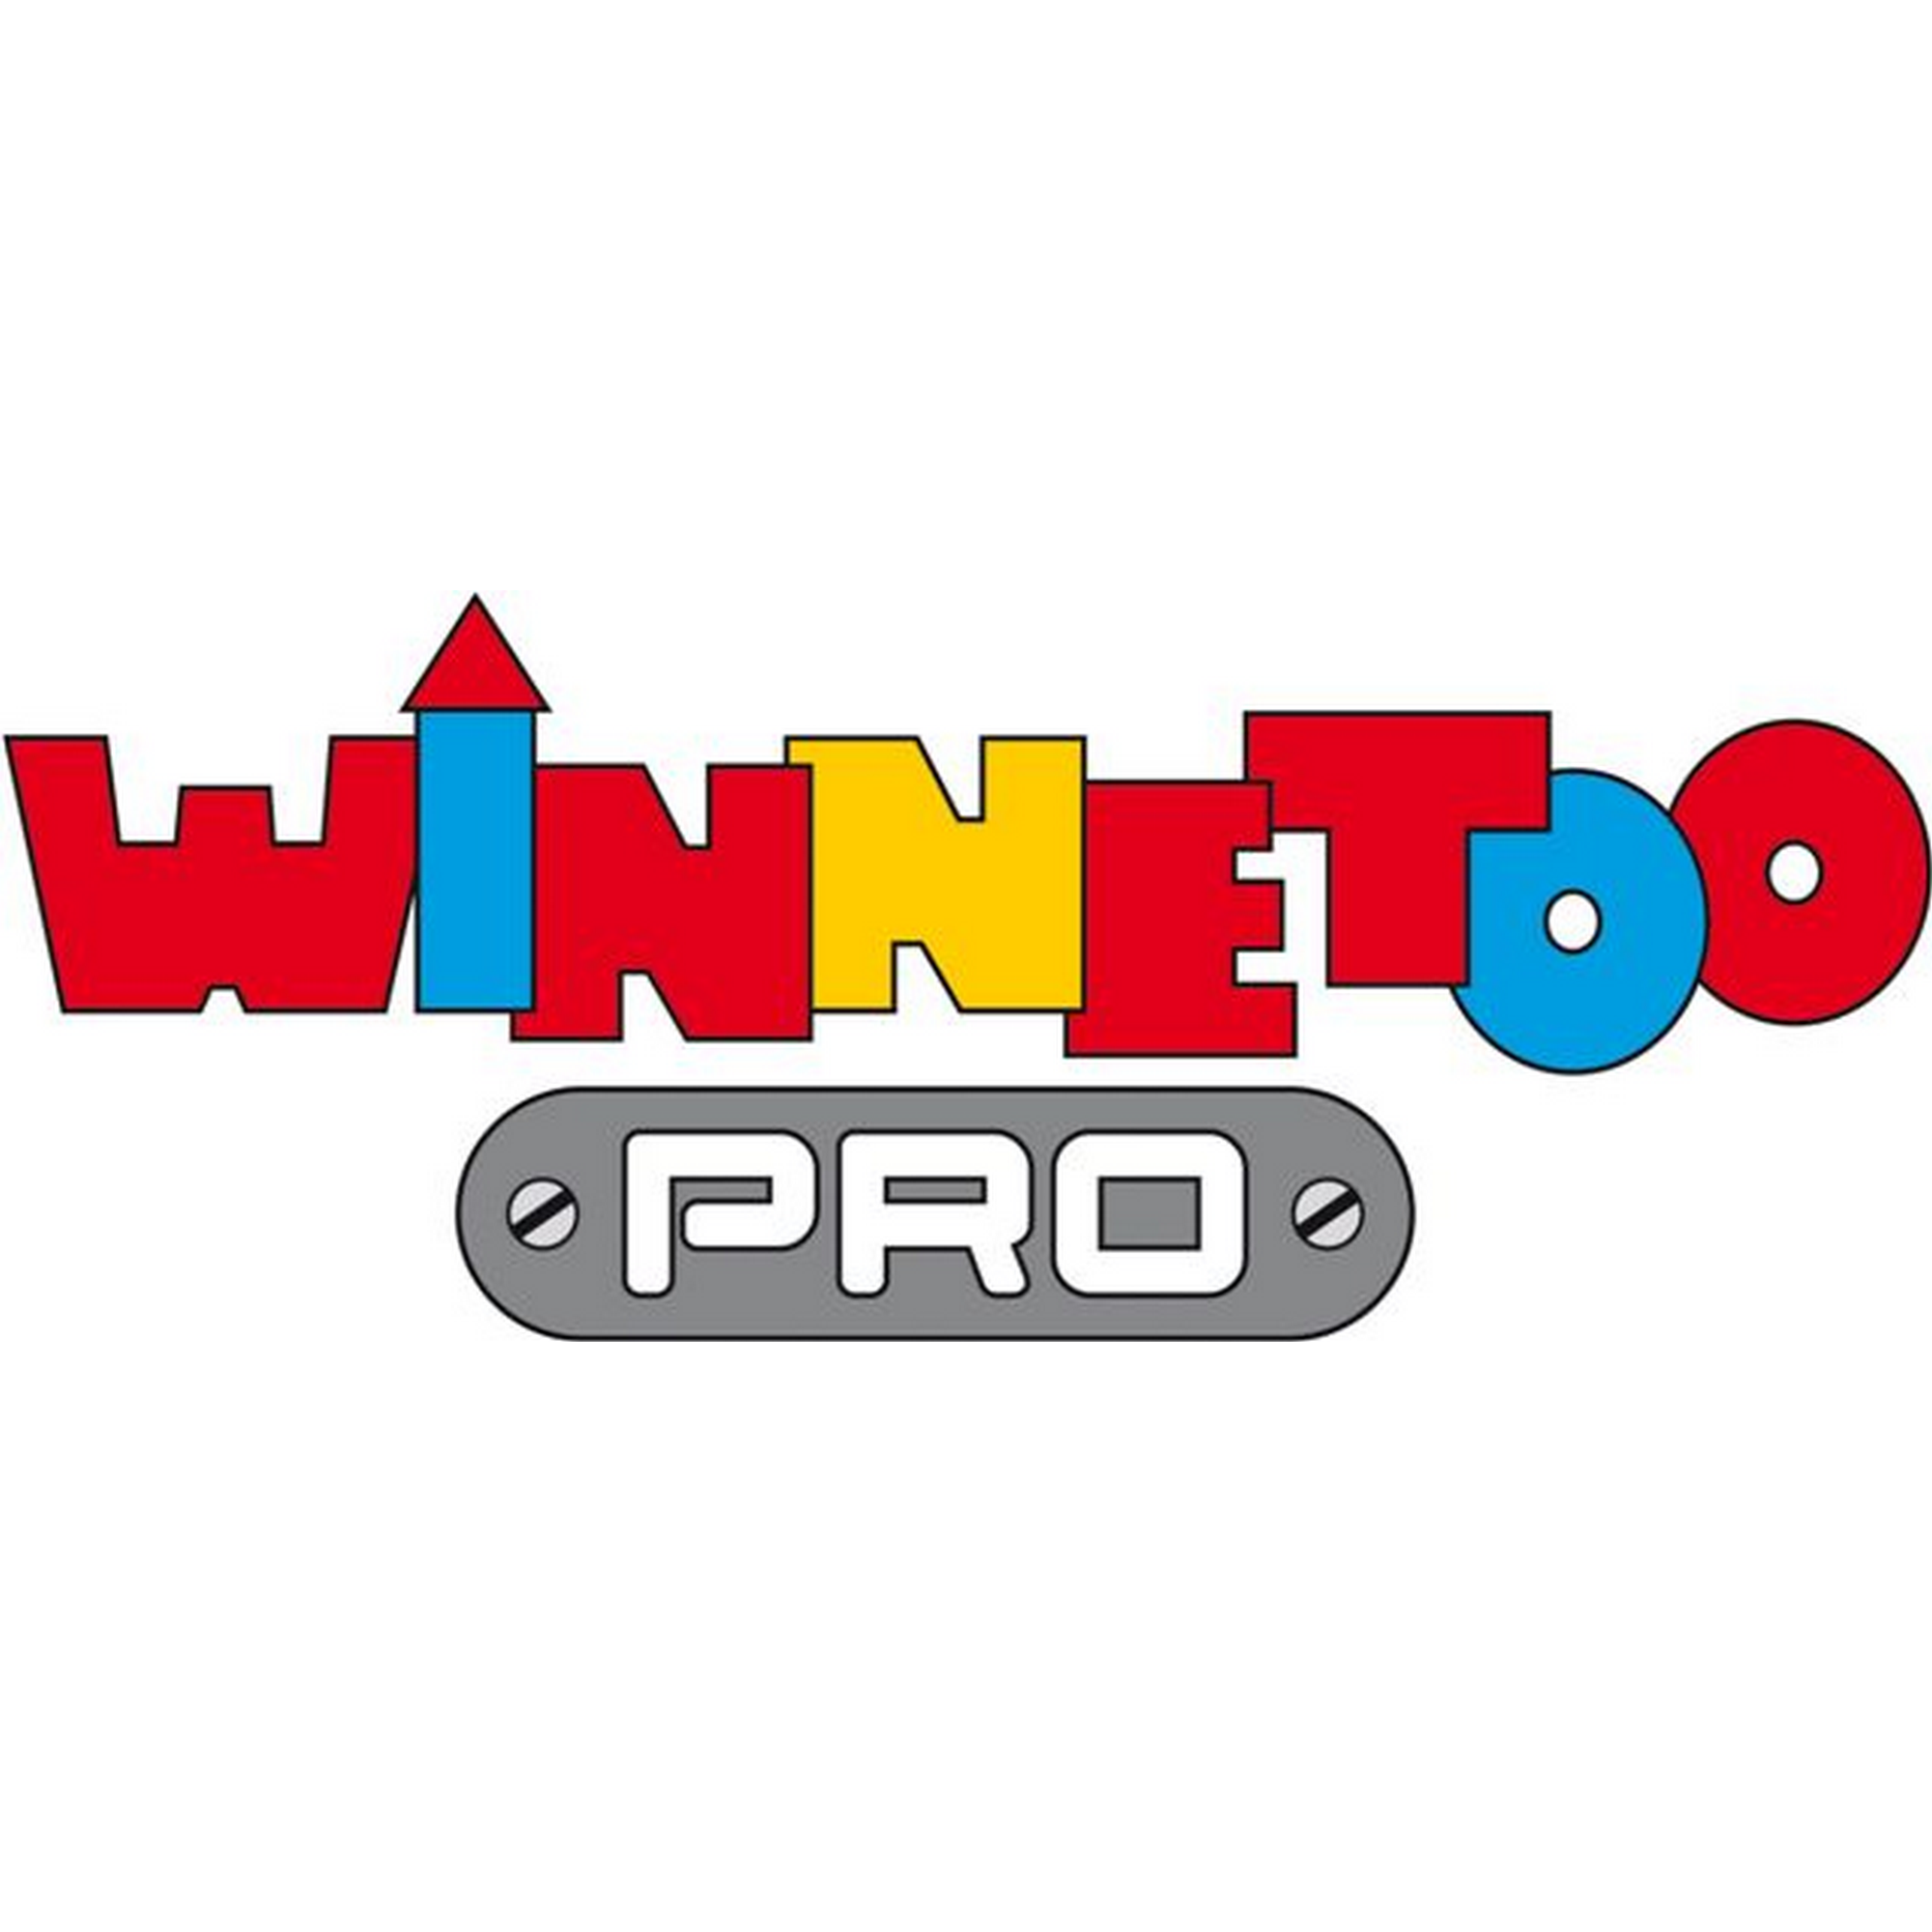 Dach-Komplettset 'Winnetoo Pro' Nadelholz 184 x 160 x 81 cm, passend für Grundturm + product picture